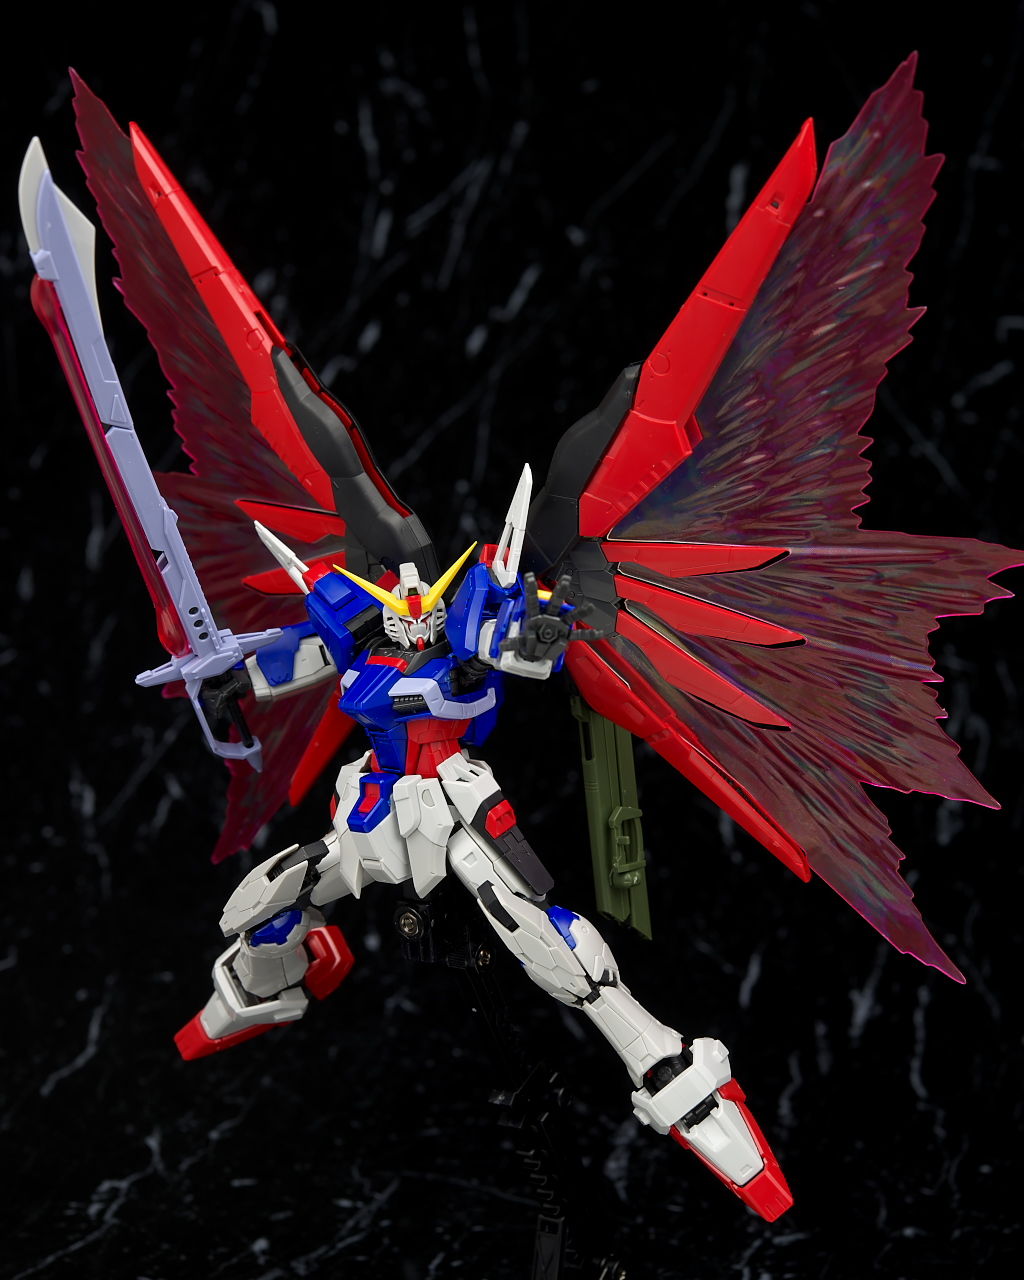 Premium Bandai 1 144 Effect Unit Wing Of Light X Rg 1 144 Destiny Gundam 2nd Photoreview No 12 Wallpaper Size Images Gunjap